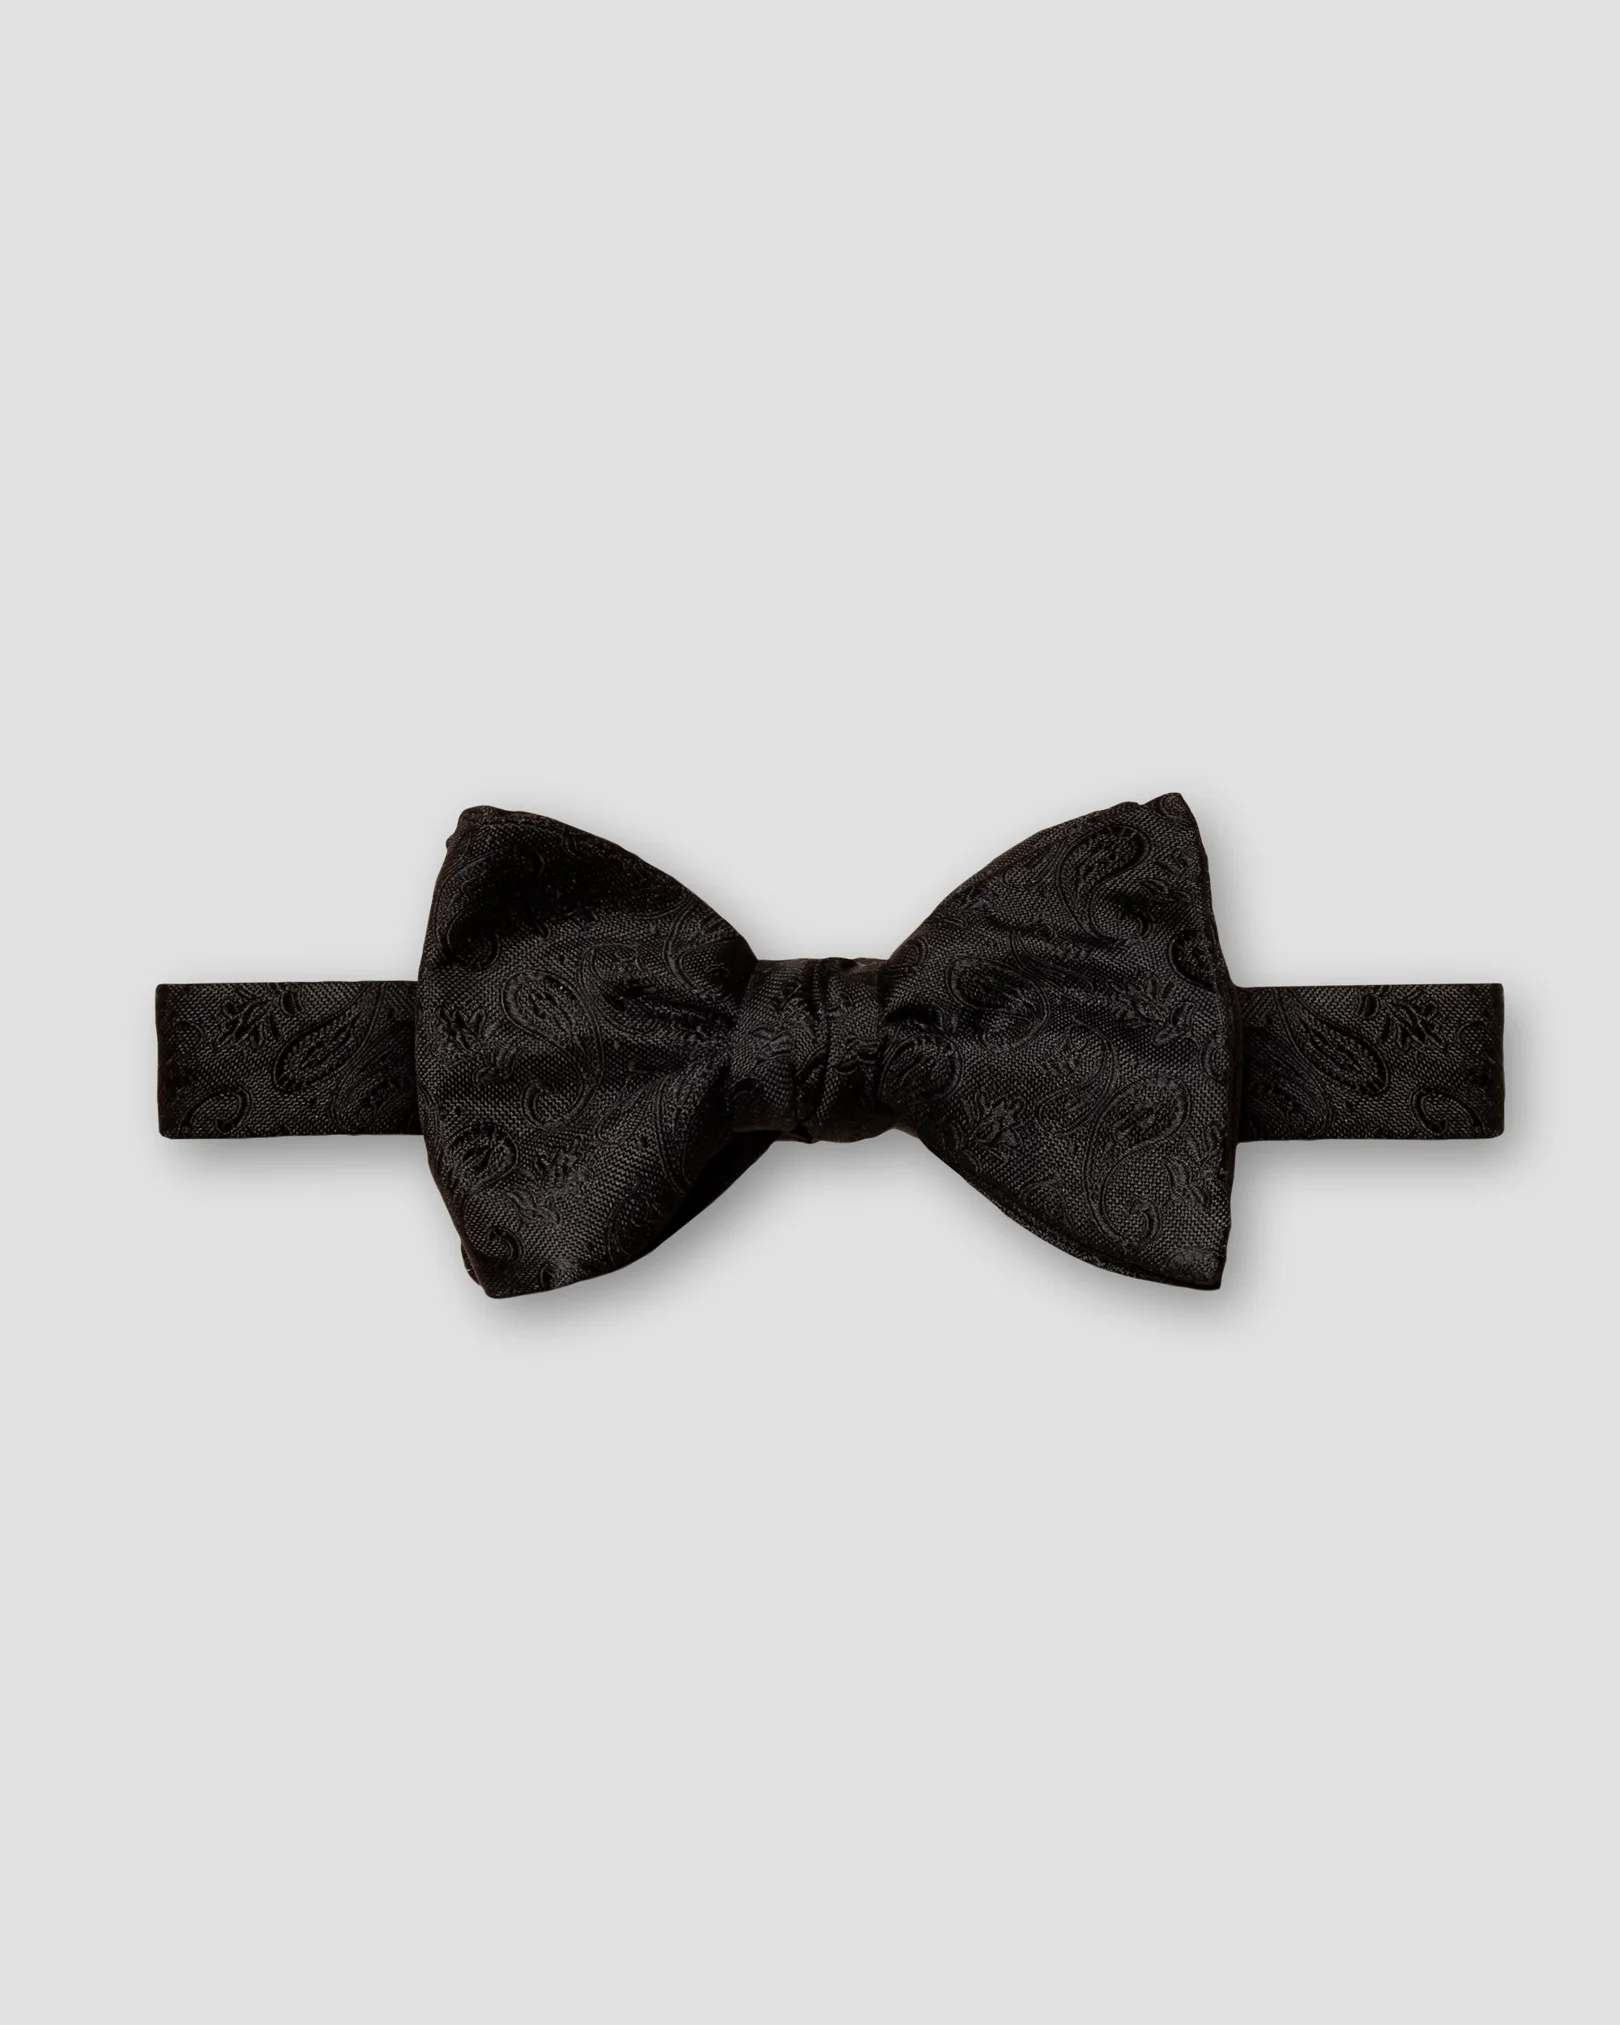 Eton - classic black bow tie